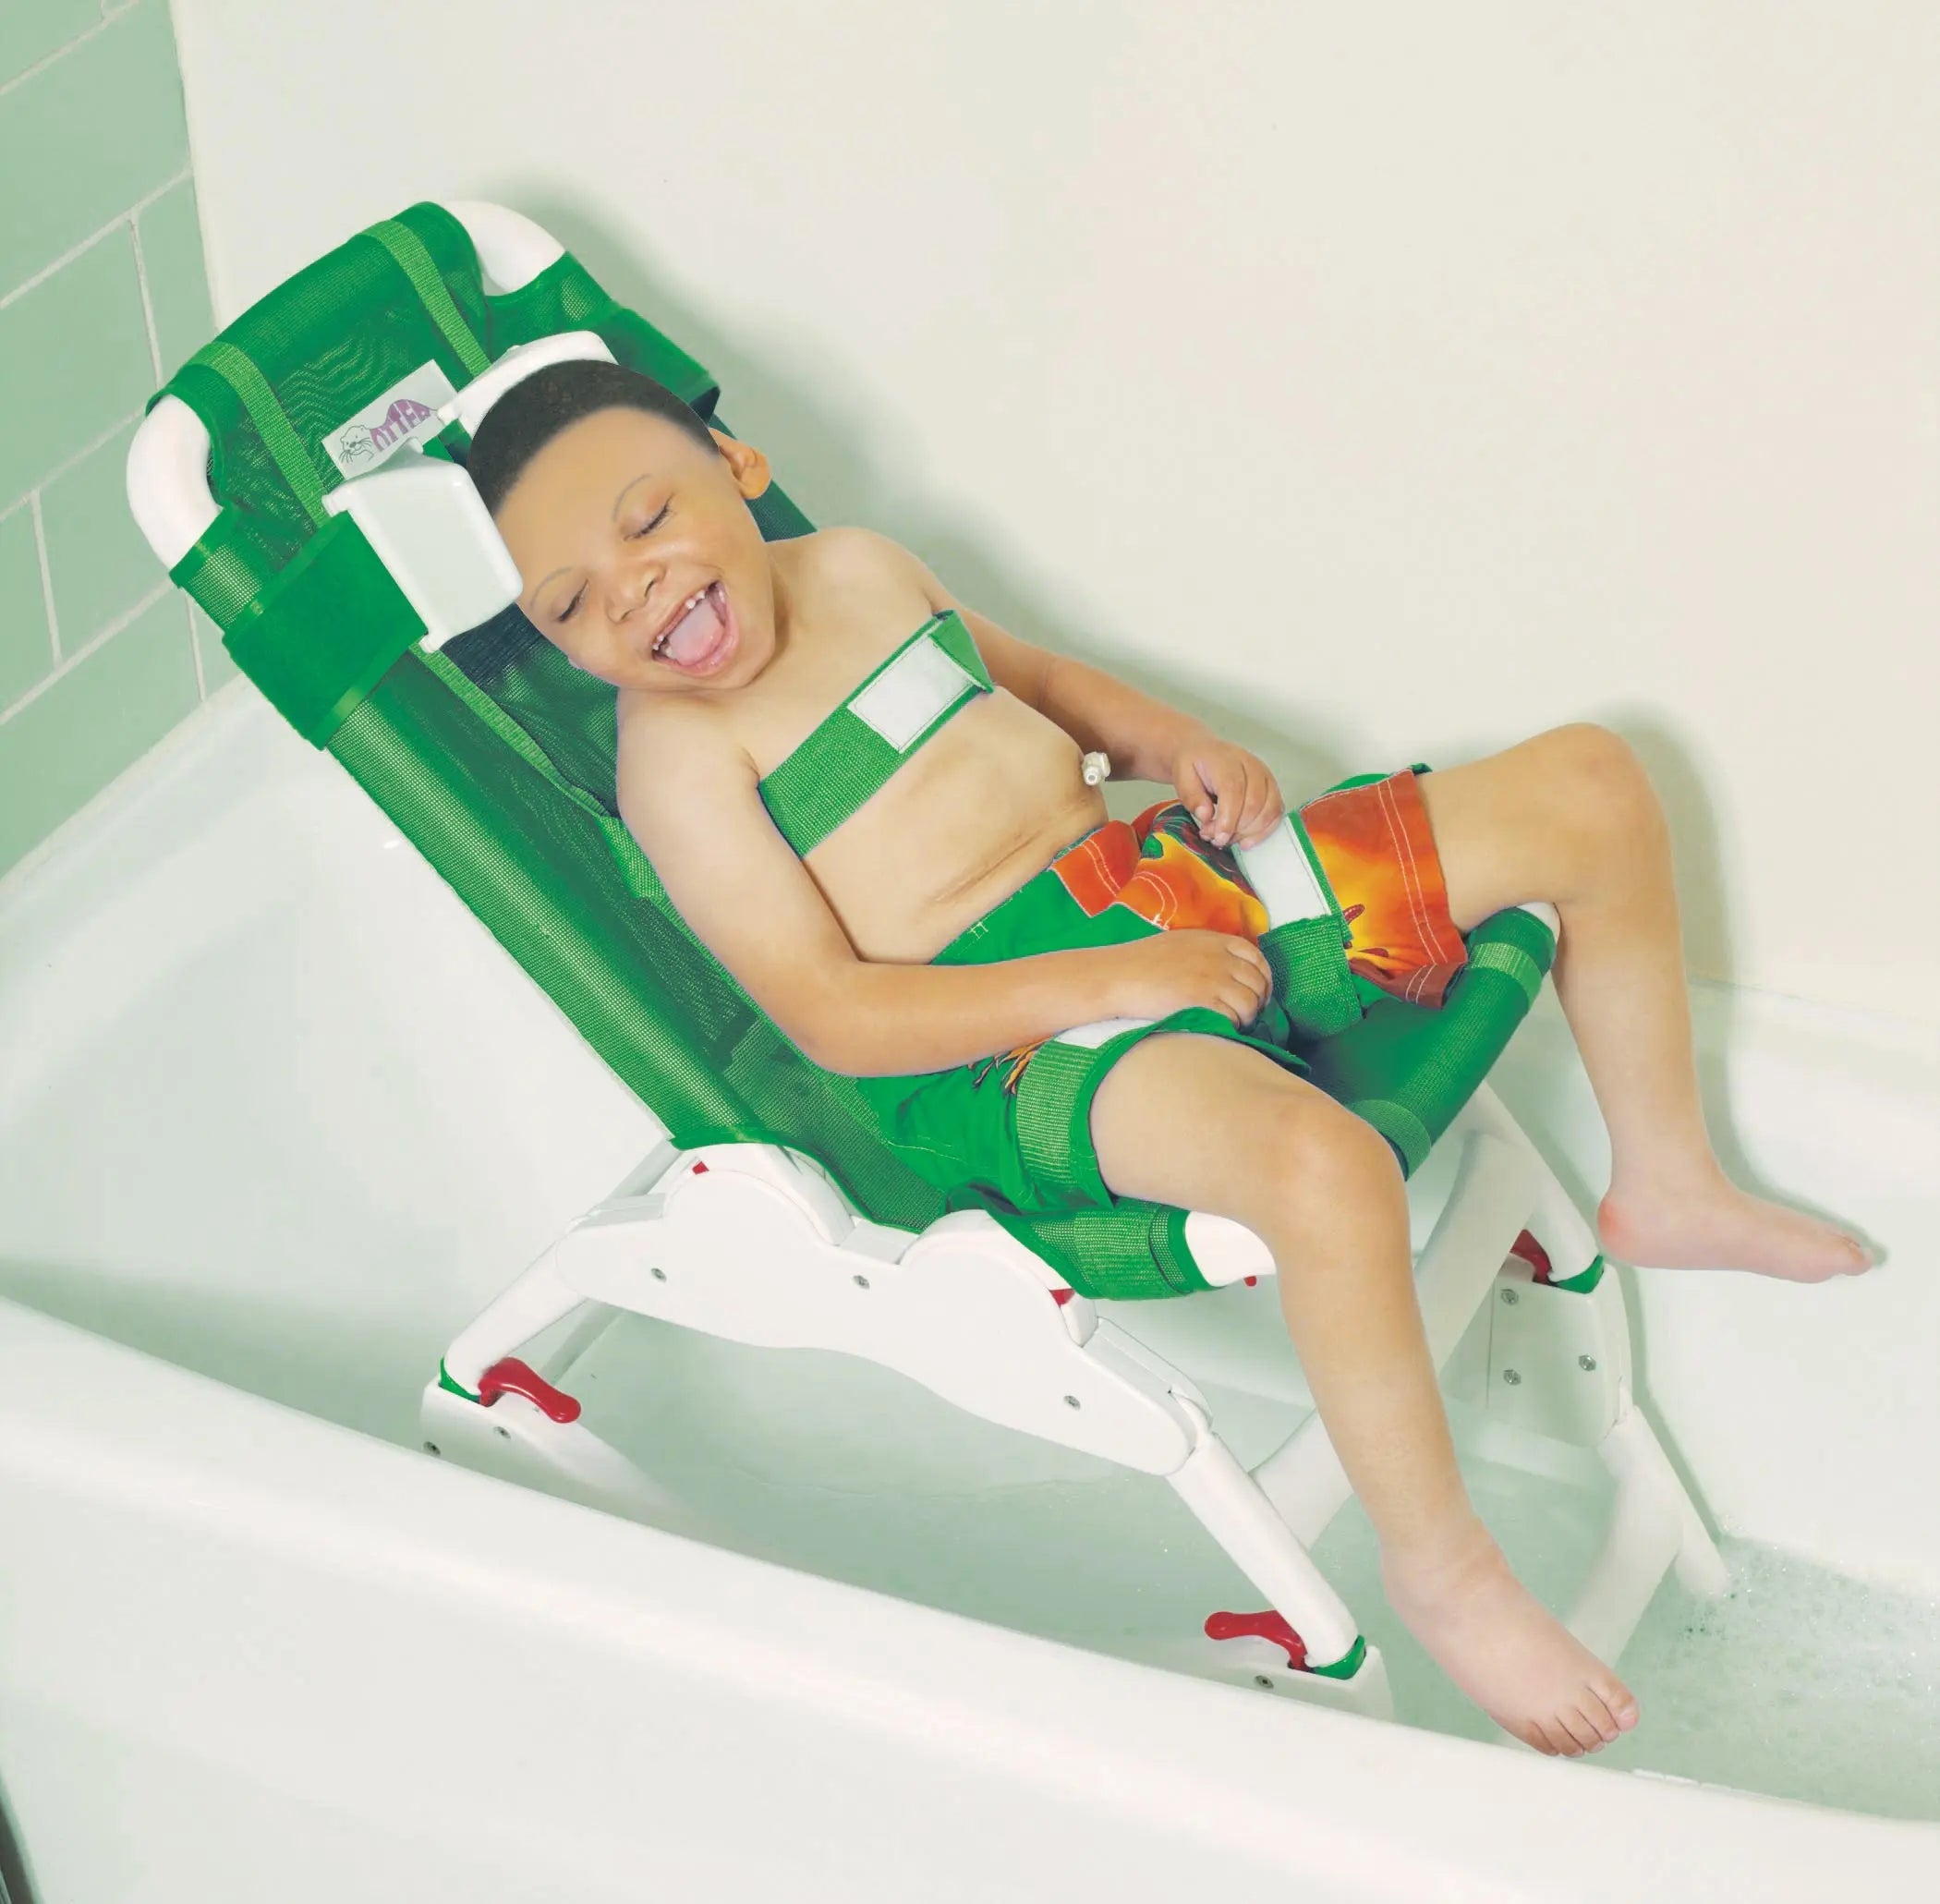 Otter Pediatric Bathing System - Home Health Store Inc